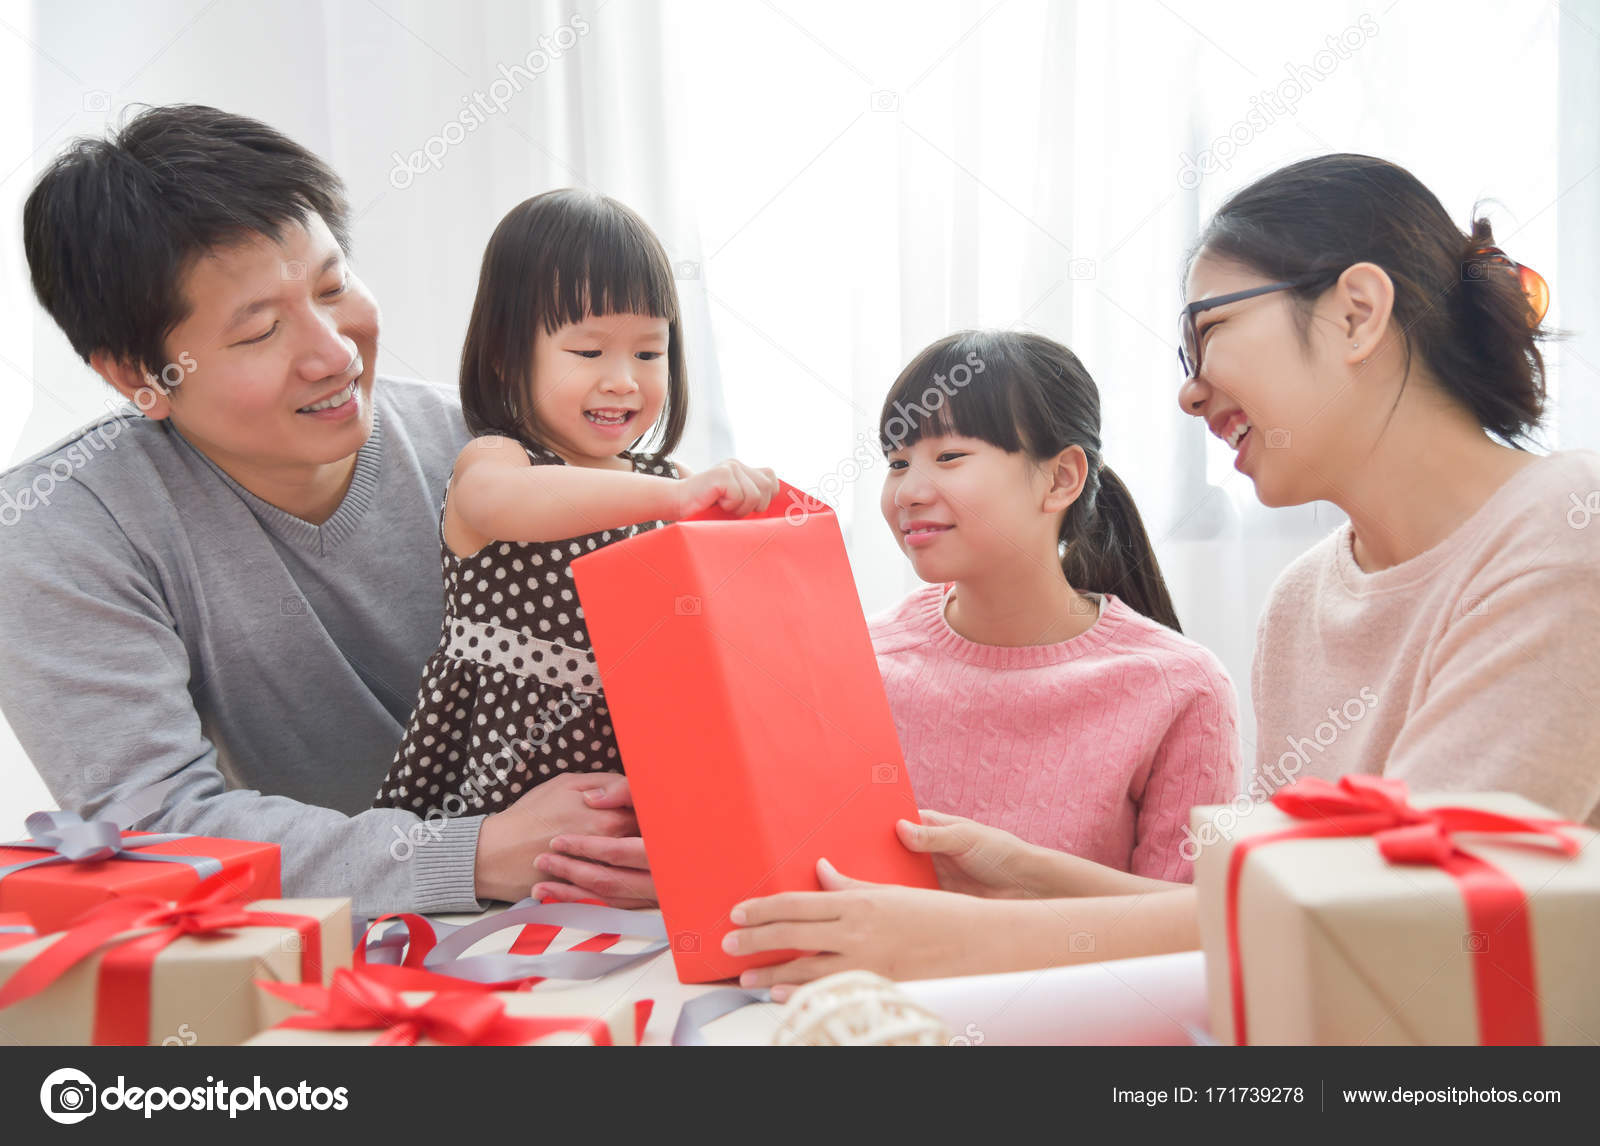 https://st3.depositphotos.com/3802127/17173/i/1600/depositphotos_171739278-stock-photo-happy-asian-family-unwrapping-a.jpg